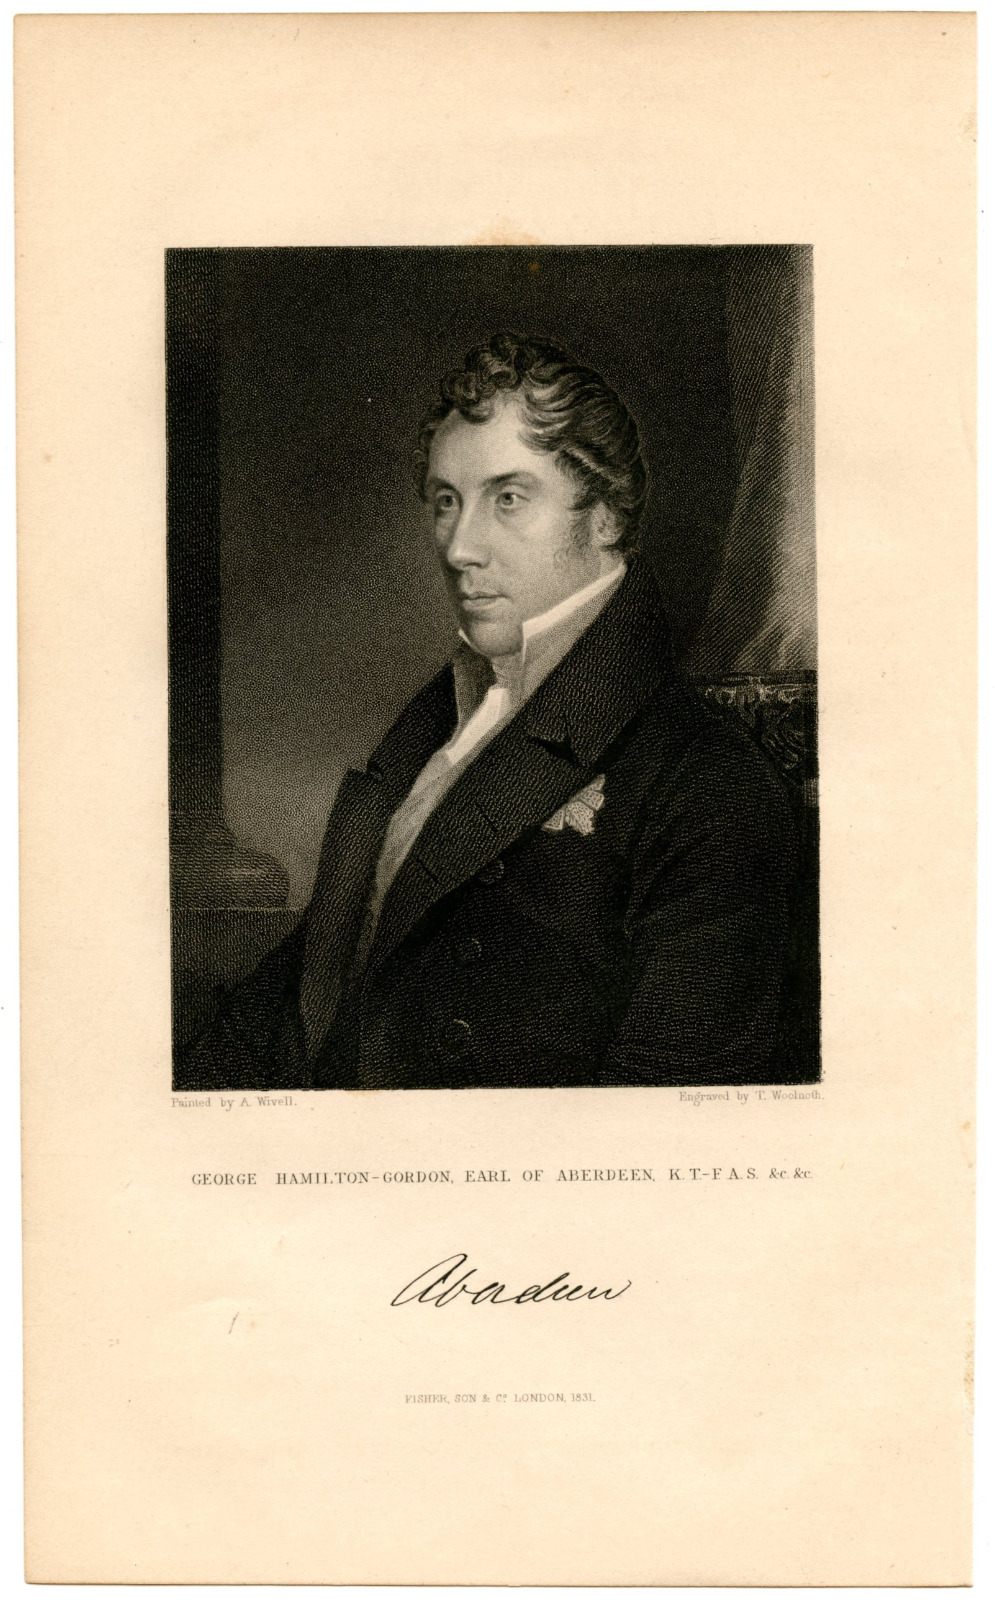 GEORGE HAMILTON-GORDON 4th EARL OF ABERDEEN, Prime Minister, 1831 Engraving 9644